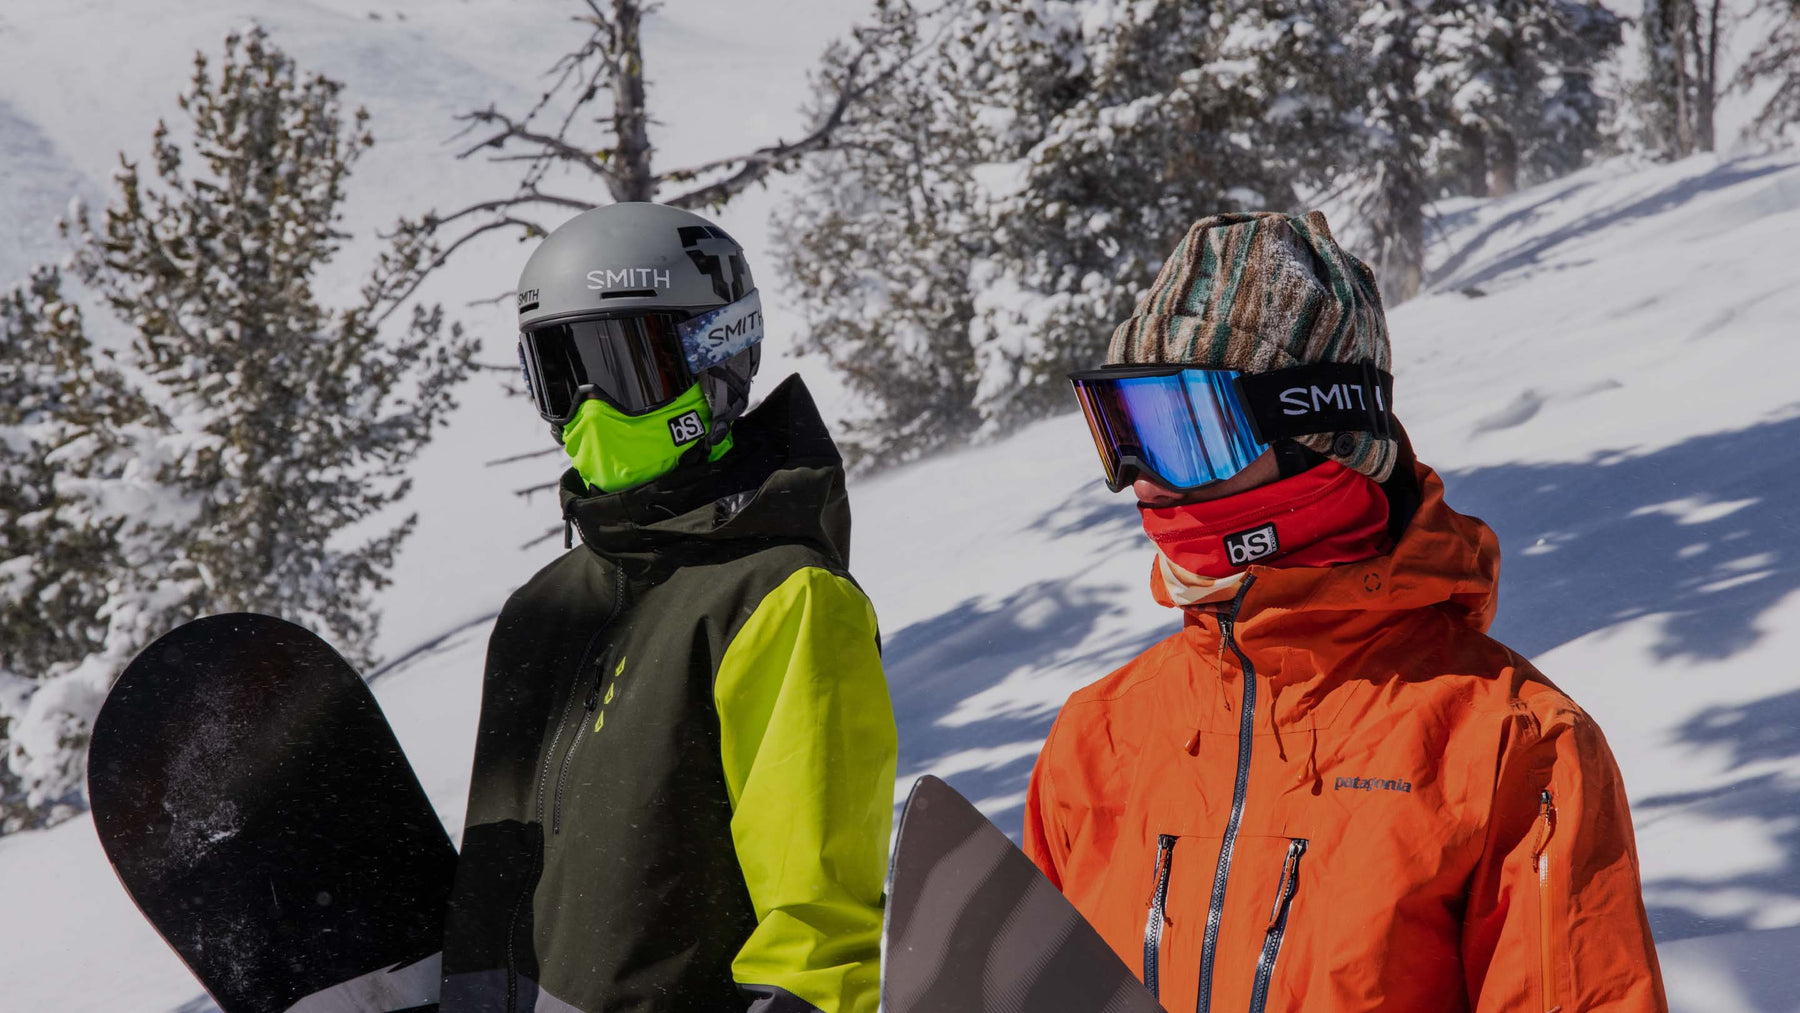 BlackStrap Face Masks Made In The USA | Ski Snowboard Face Masks – BlackStrap®